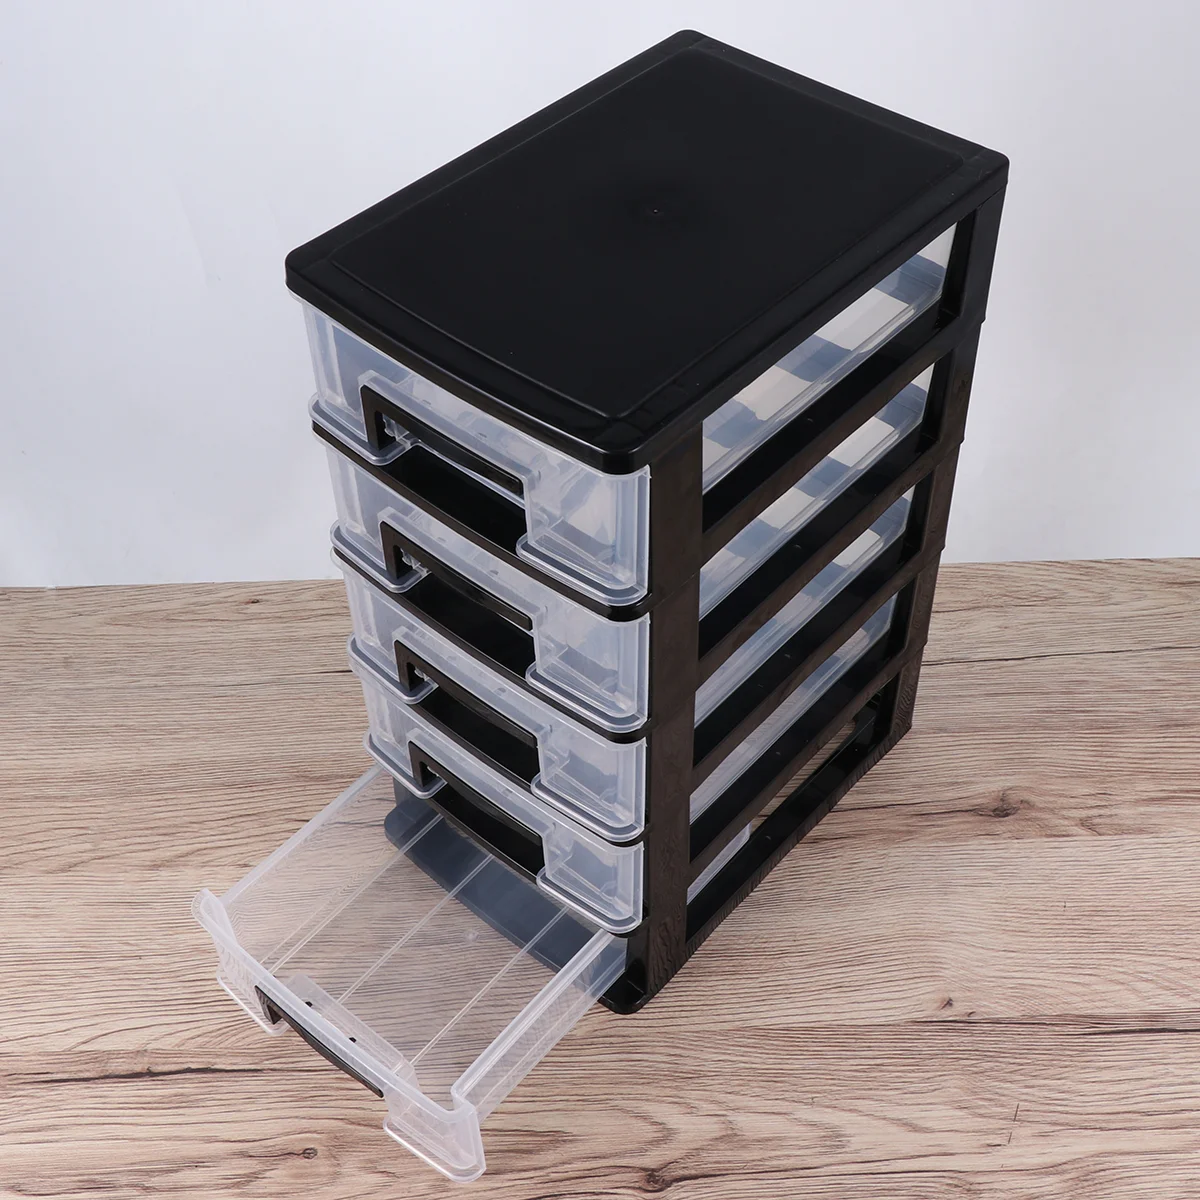 

Storage Drawer Drawers Organizer Plastic Box Cabinet Closet Desktop Bins Type Sundries Holder Stacking Desk Stackable Layer